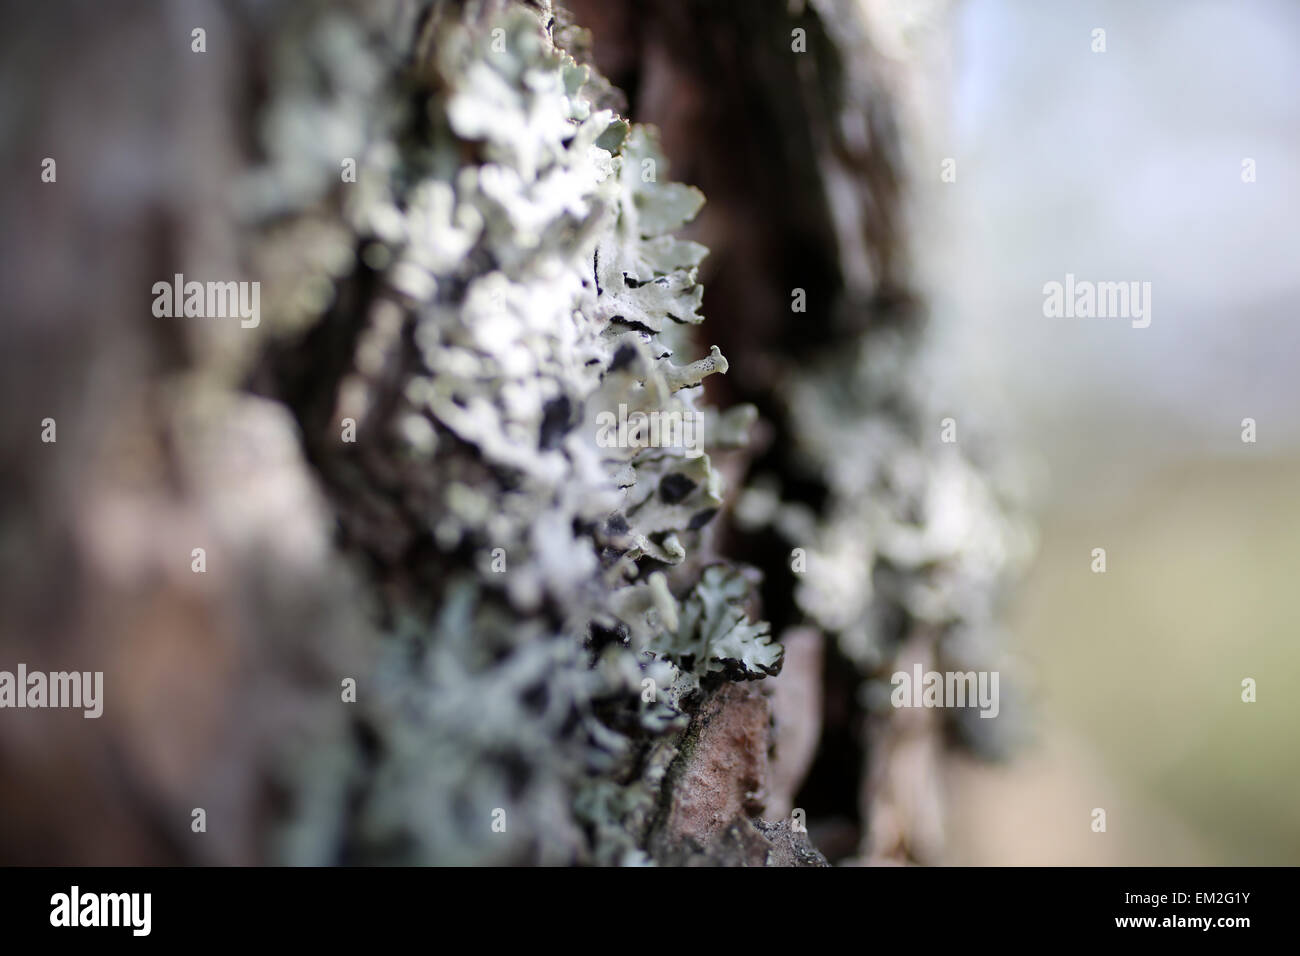 Lichen Parmelia - Macrolichen - On oak tree branches Stock Photo